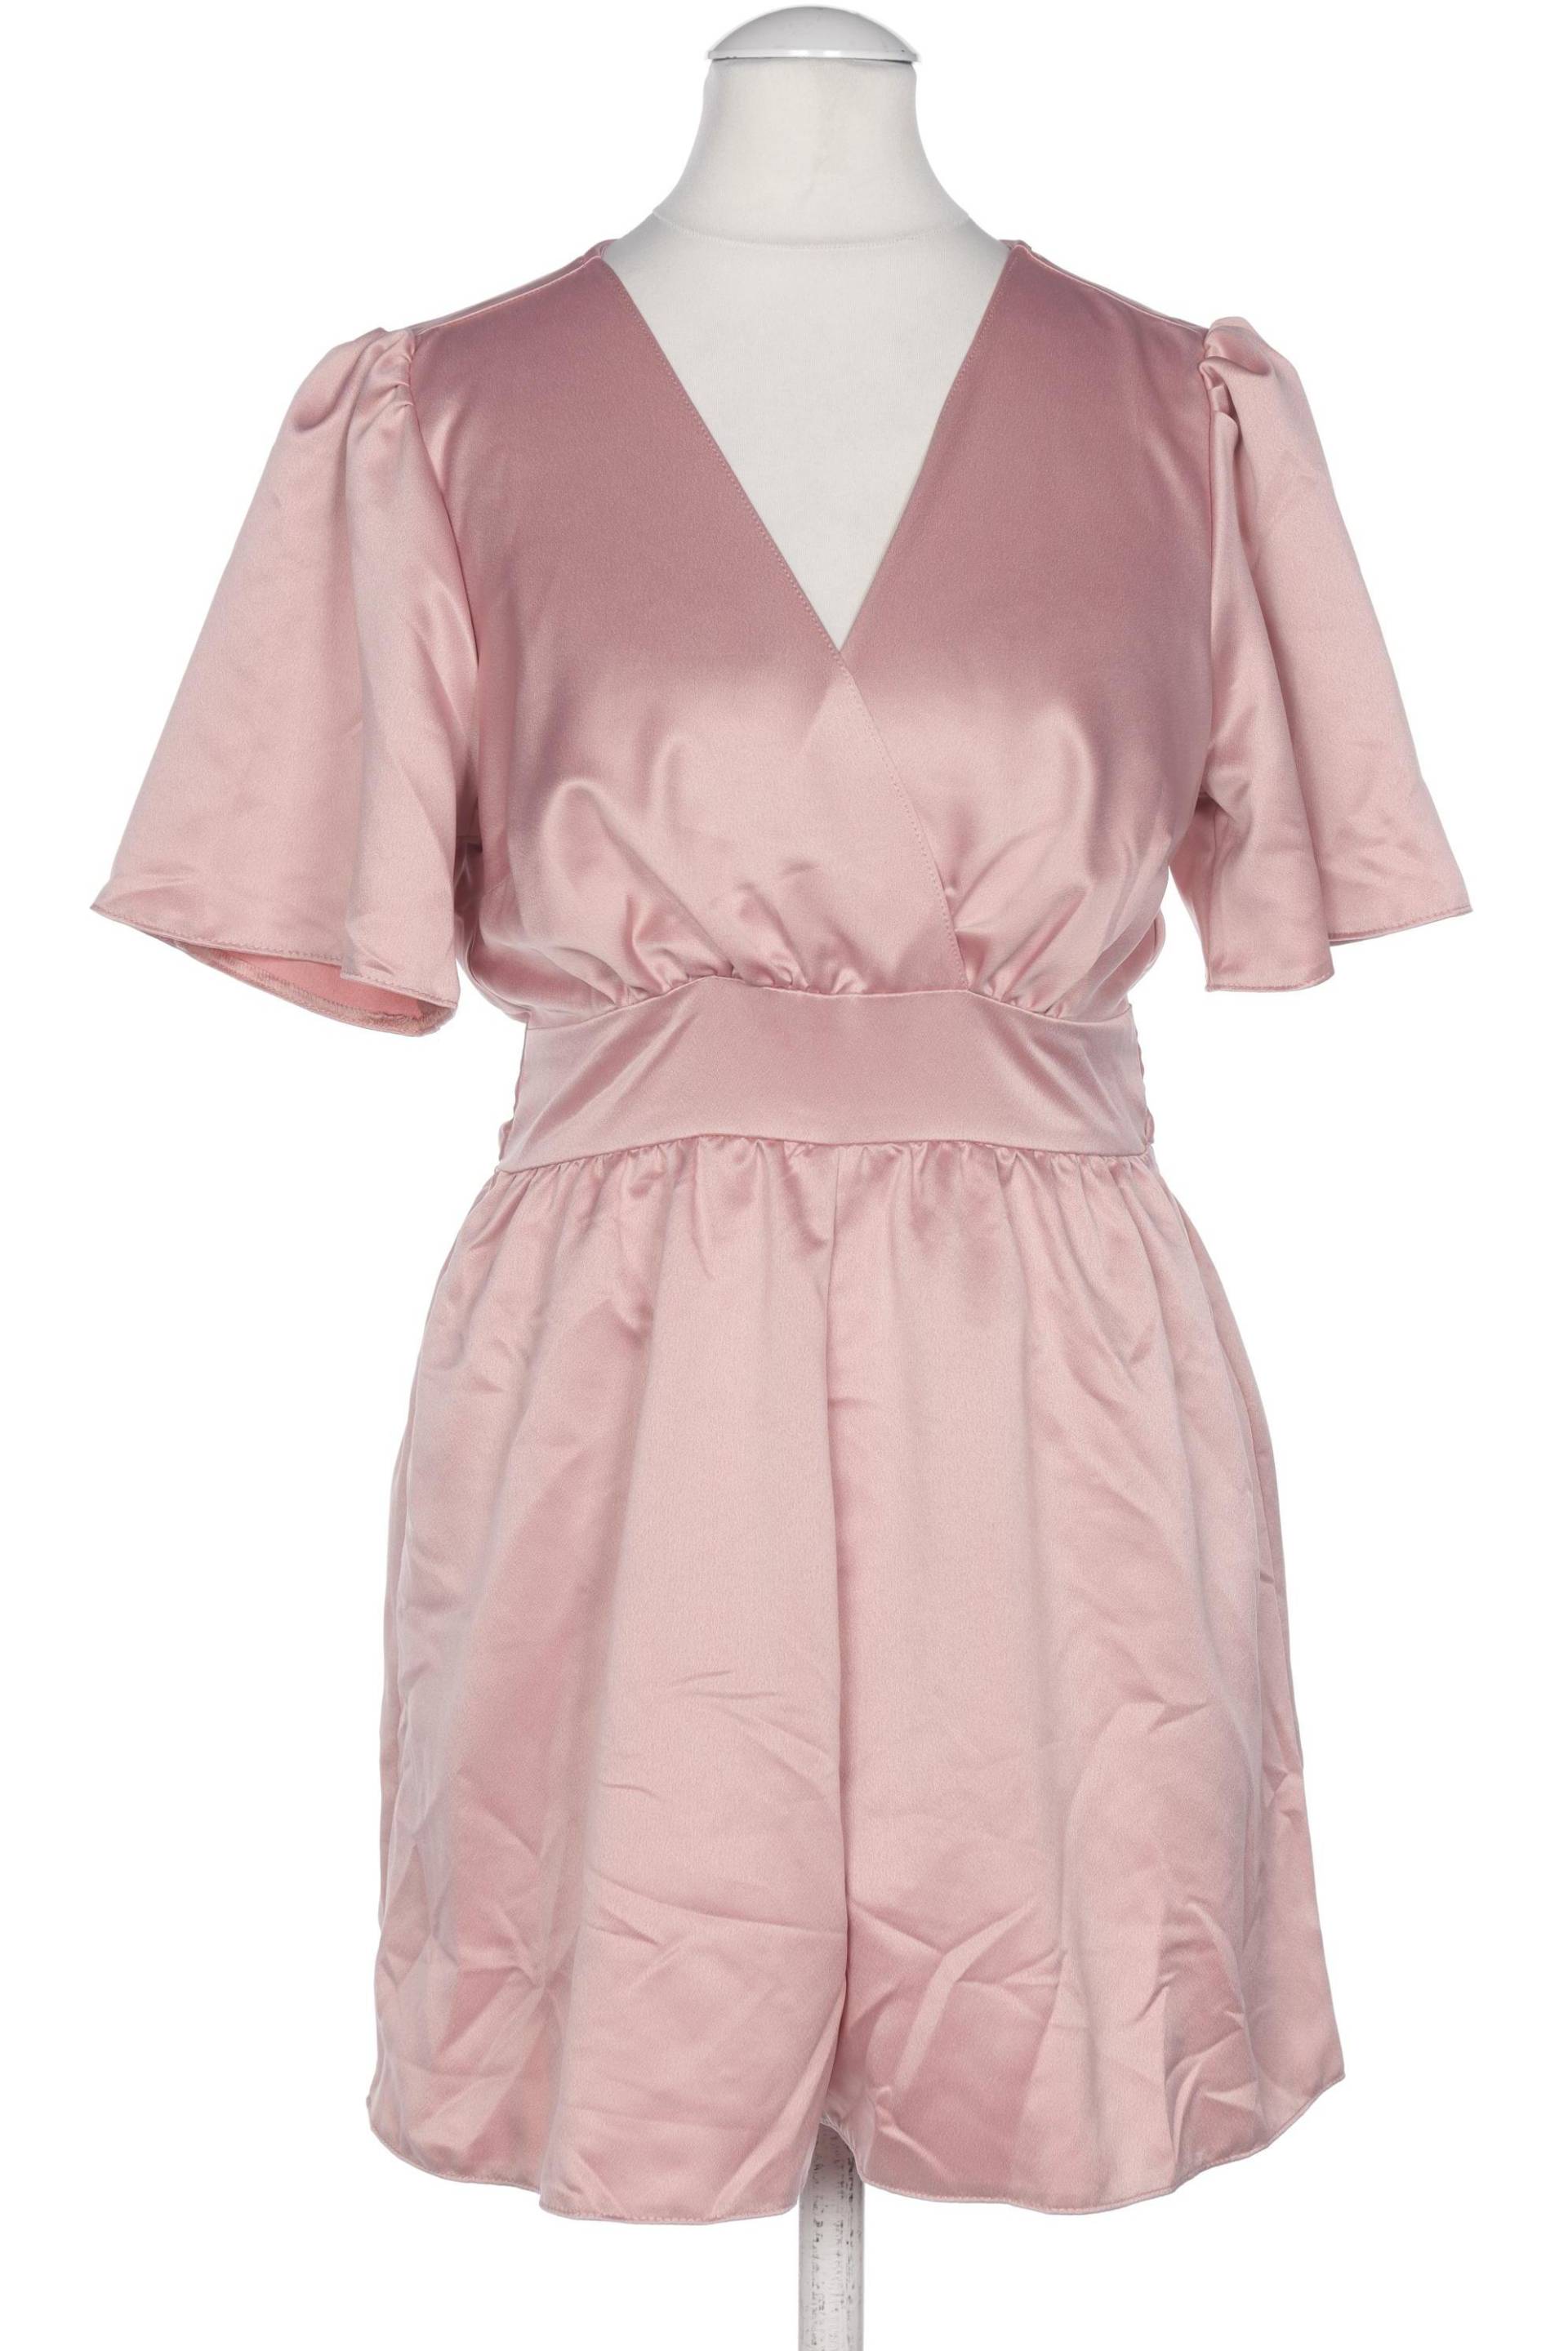 Miss Selfridge Damen Jumpsuit/Overall, pink von Miss Selfridge